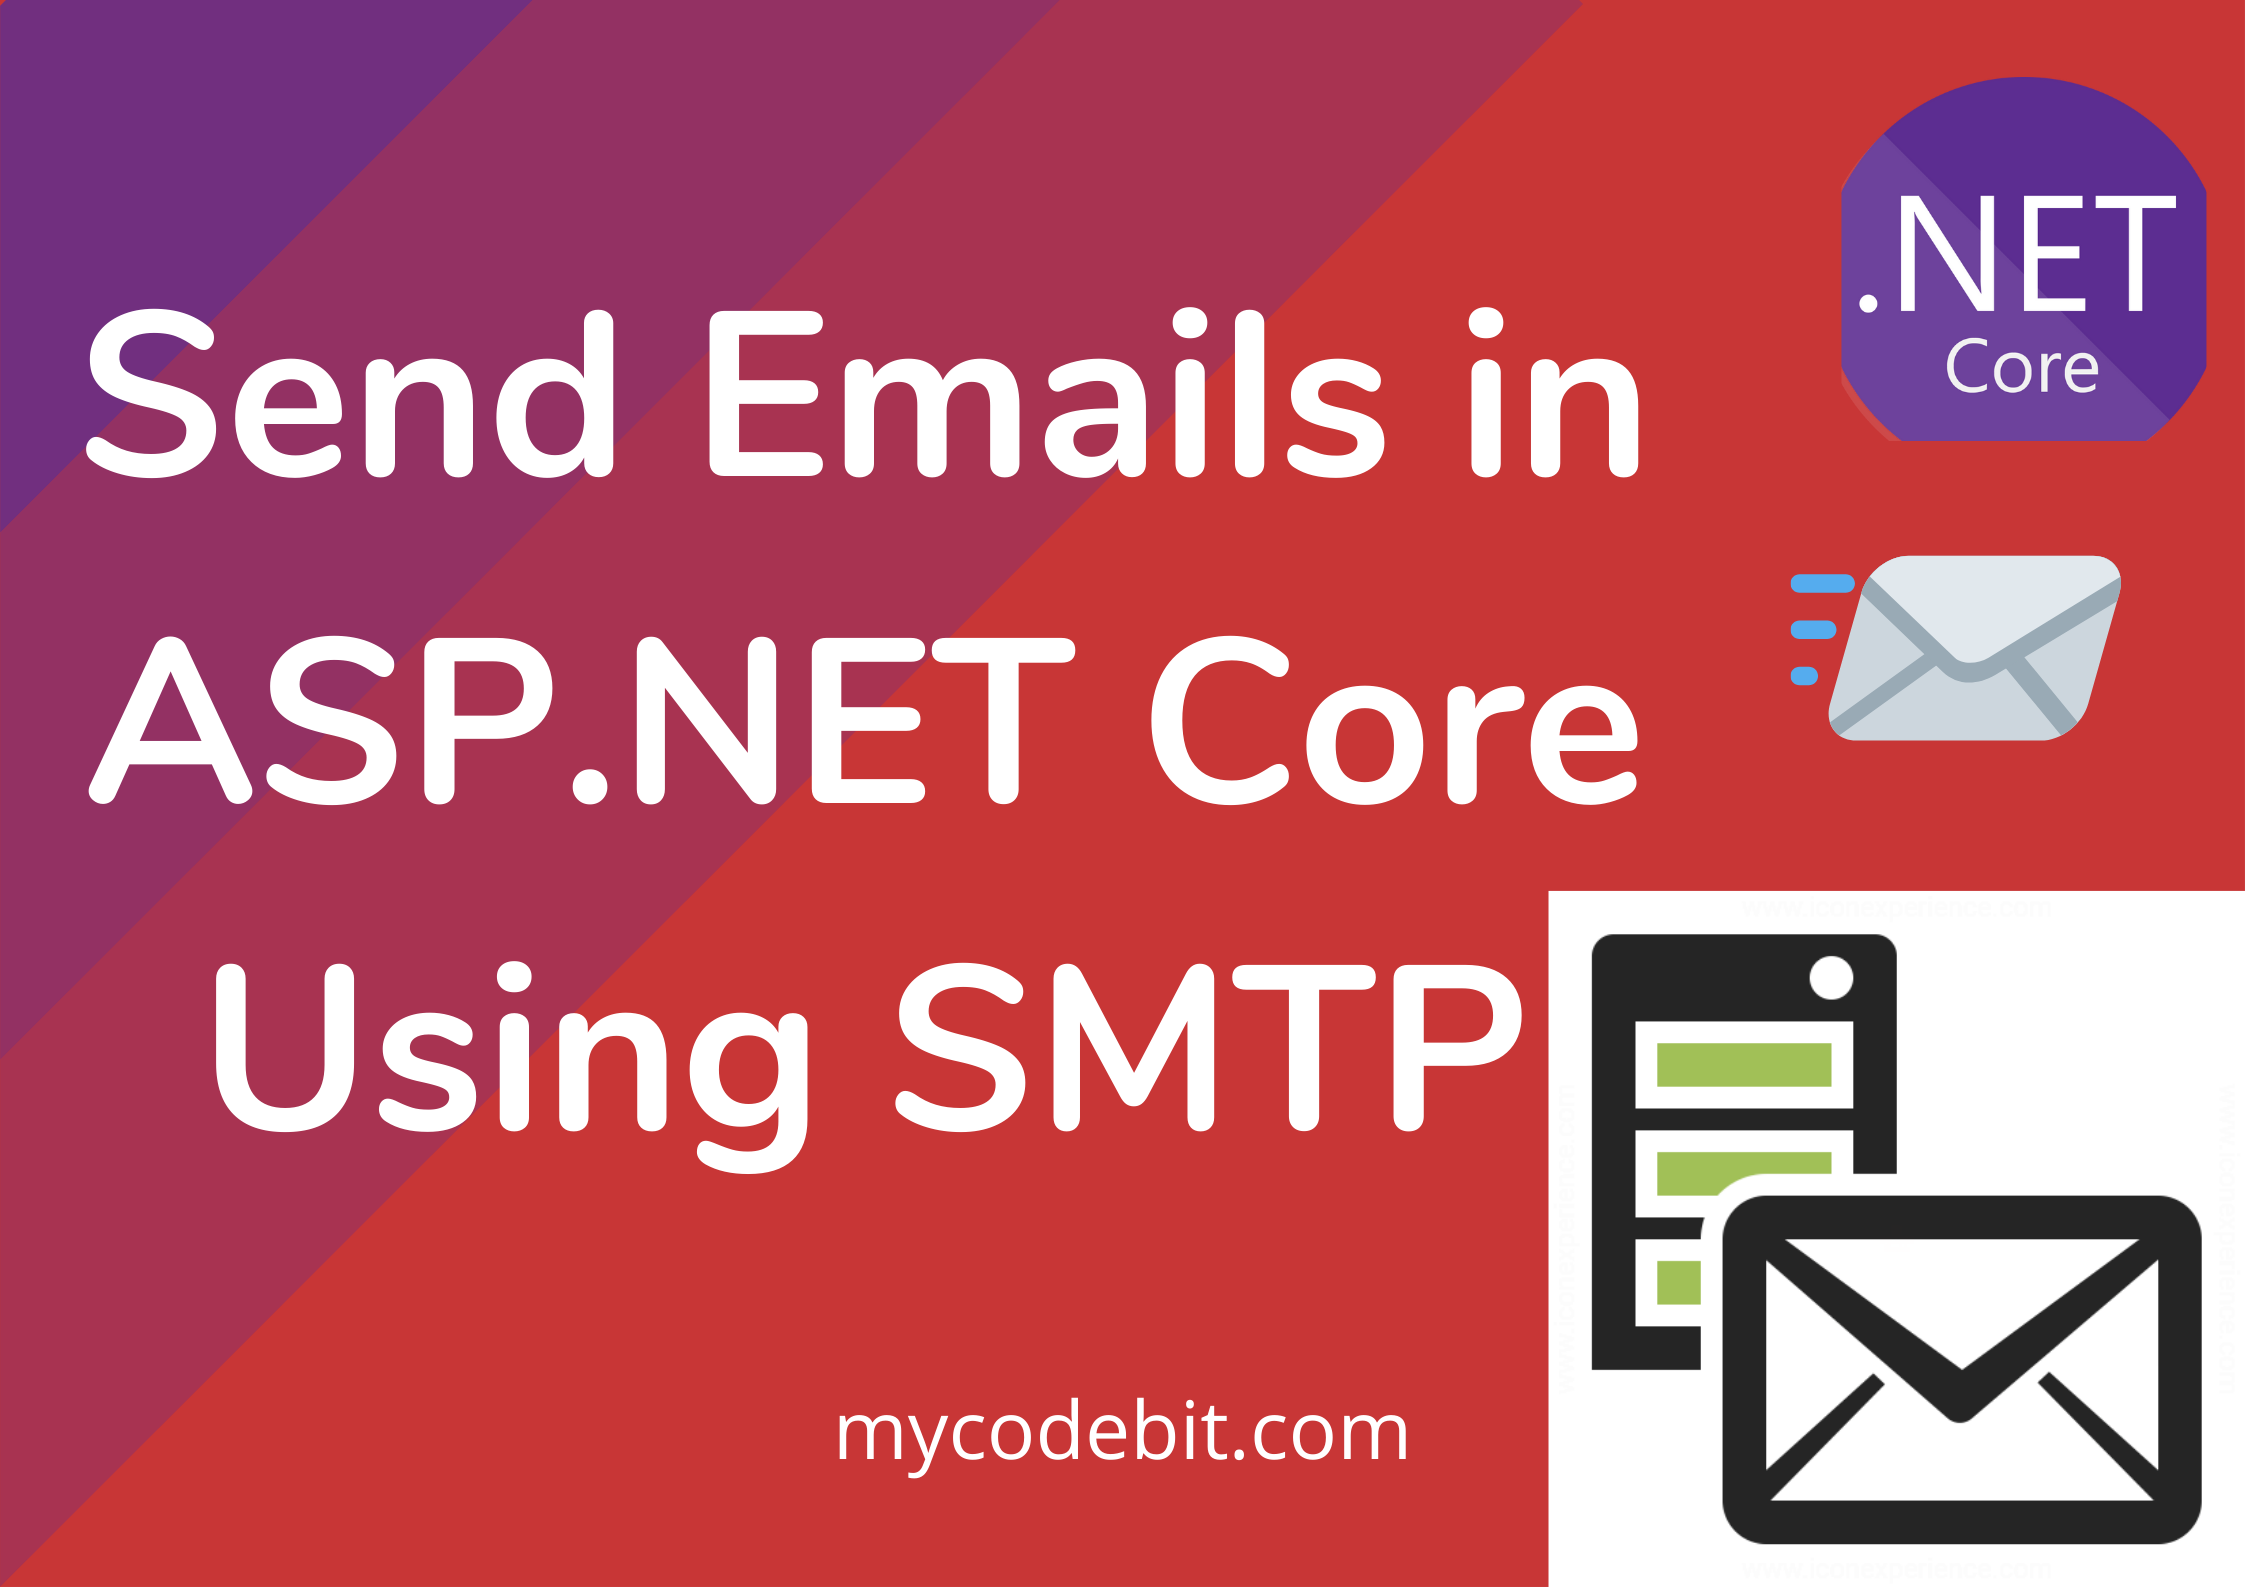 How to Send Emails ASP.NET Core 5 Using SMTP